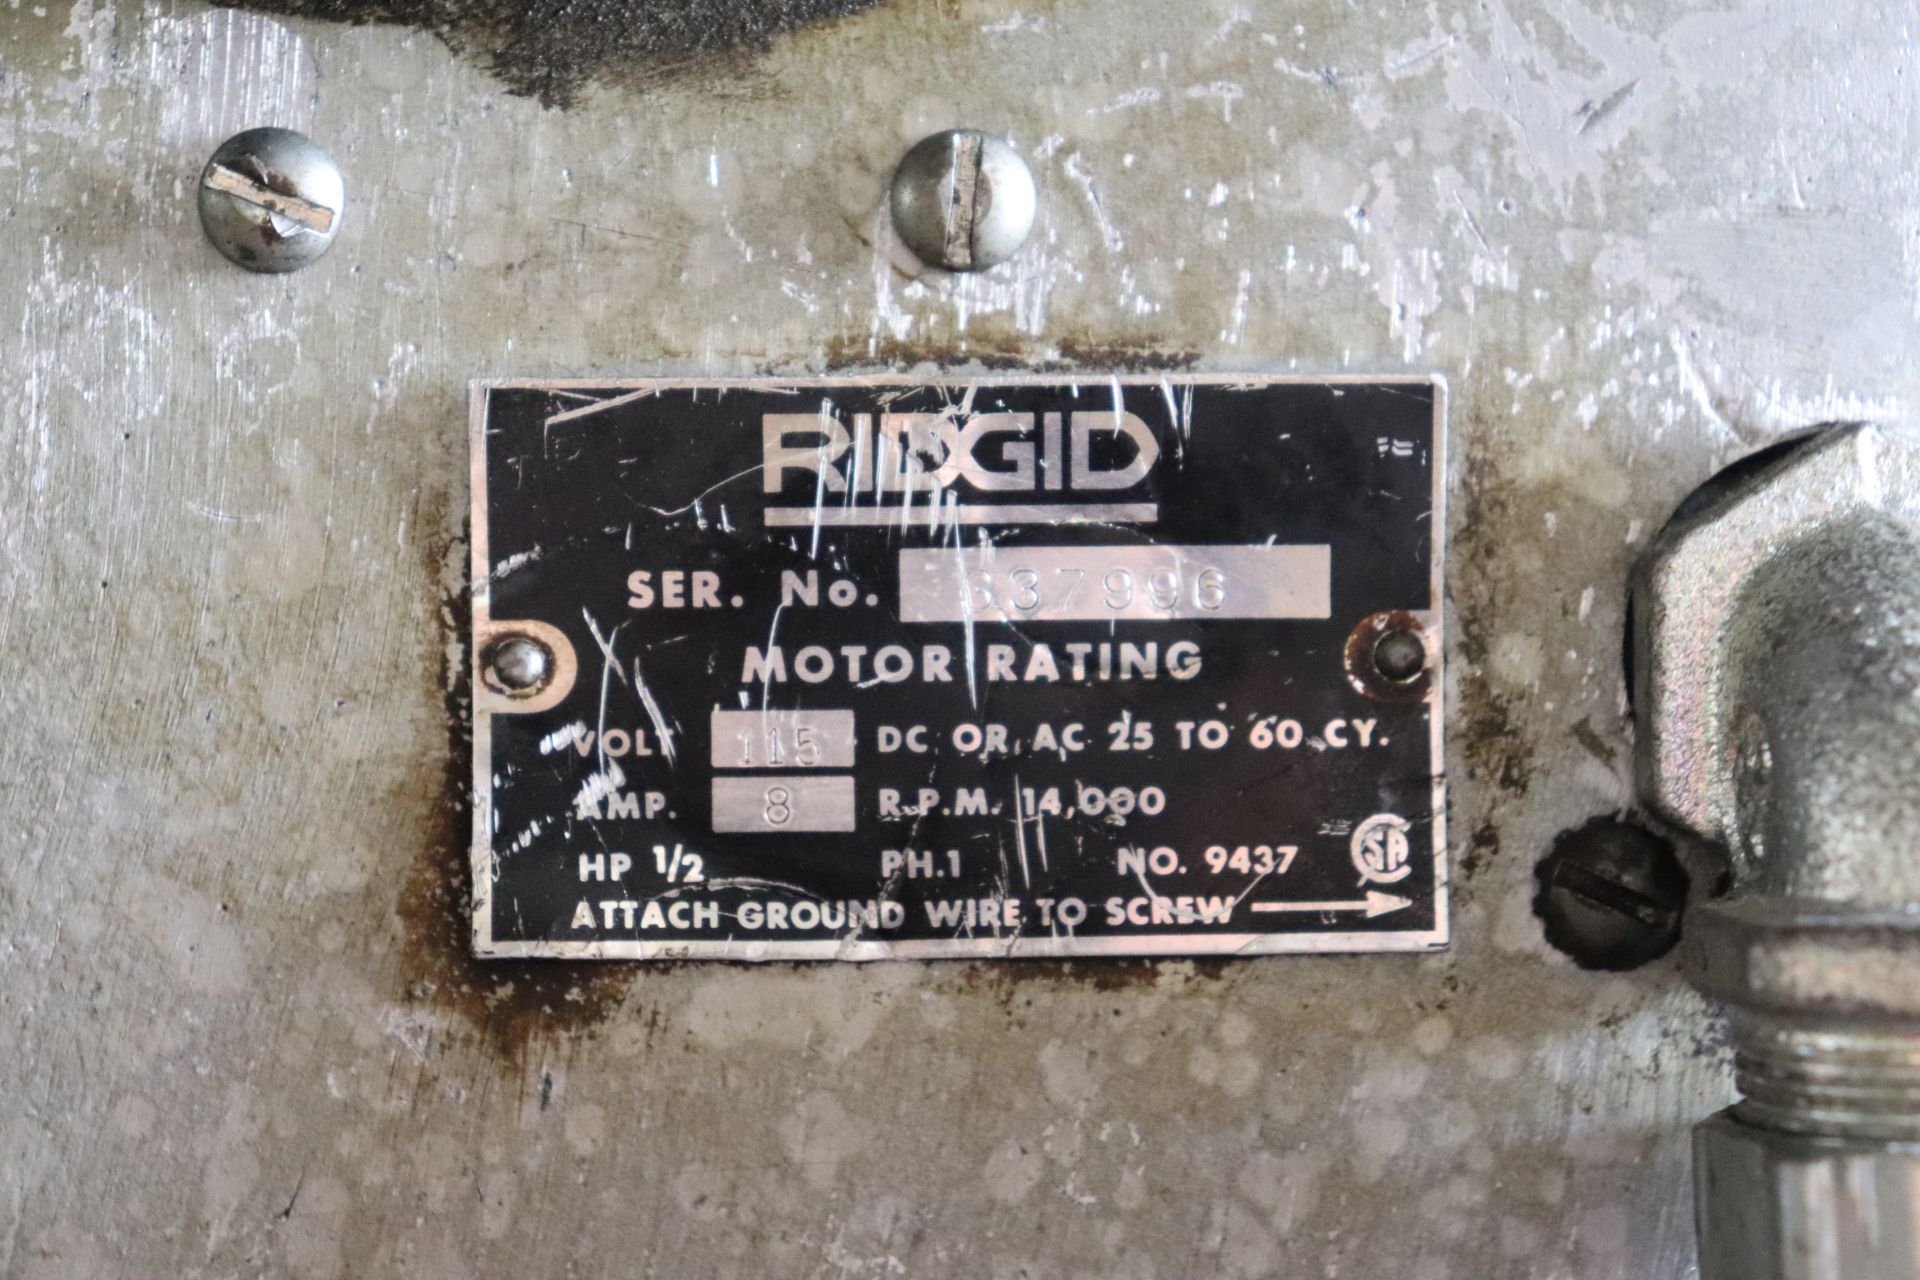 Ridgid model 535 pipe threading machine, serial 337996 - Image 4 of 4